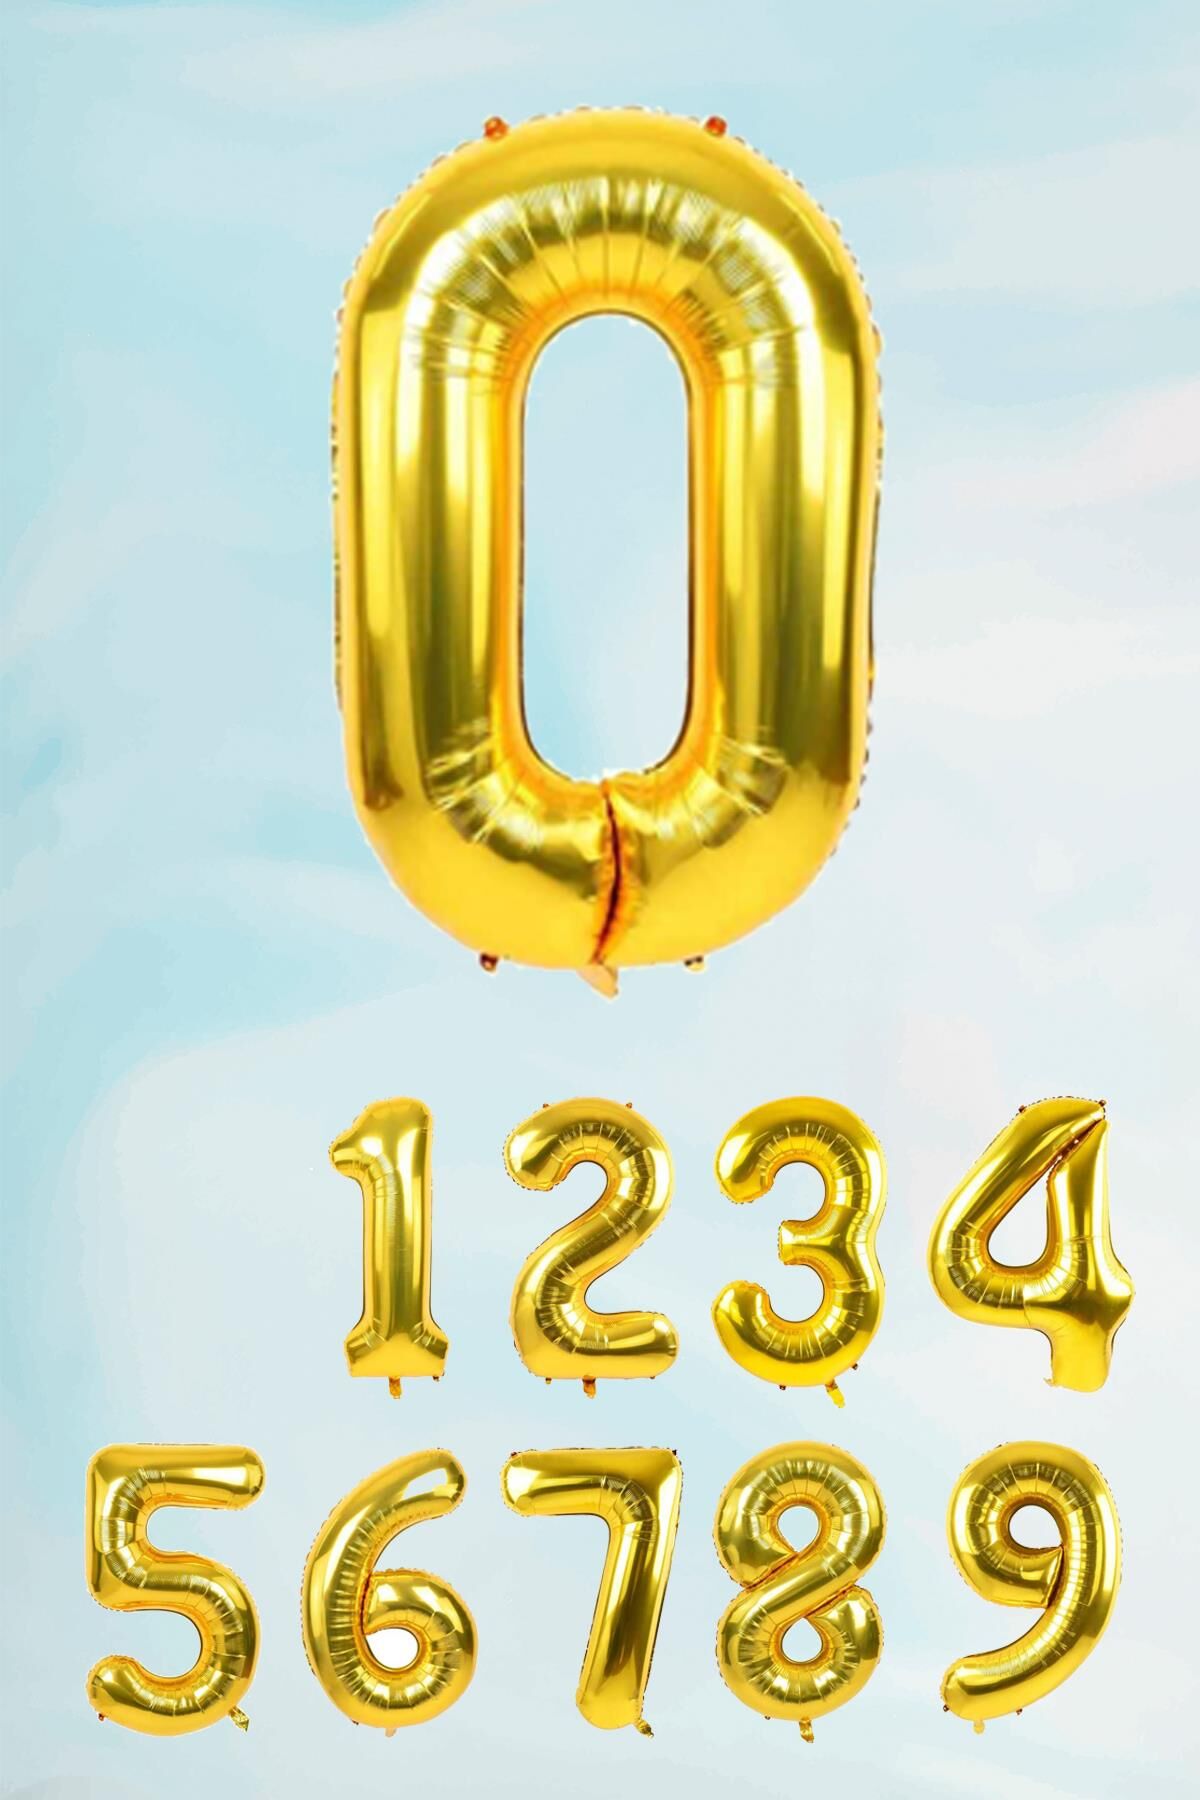 Gold Rakam Folyo Balon Büyük Boy Gold Sayı Balonlar 100cm 40inç